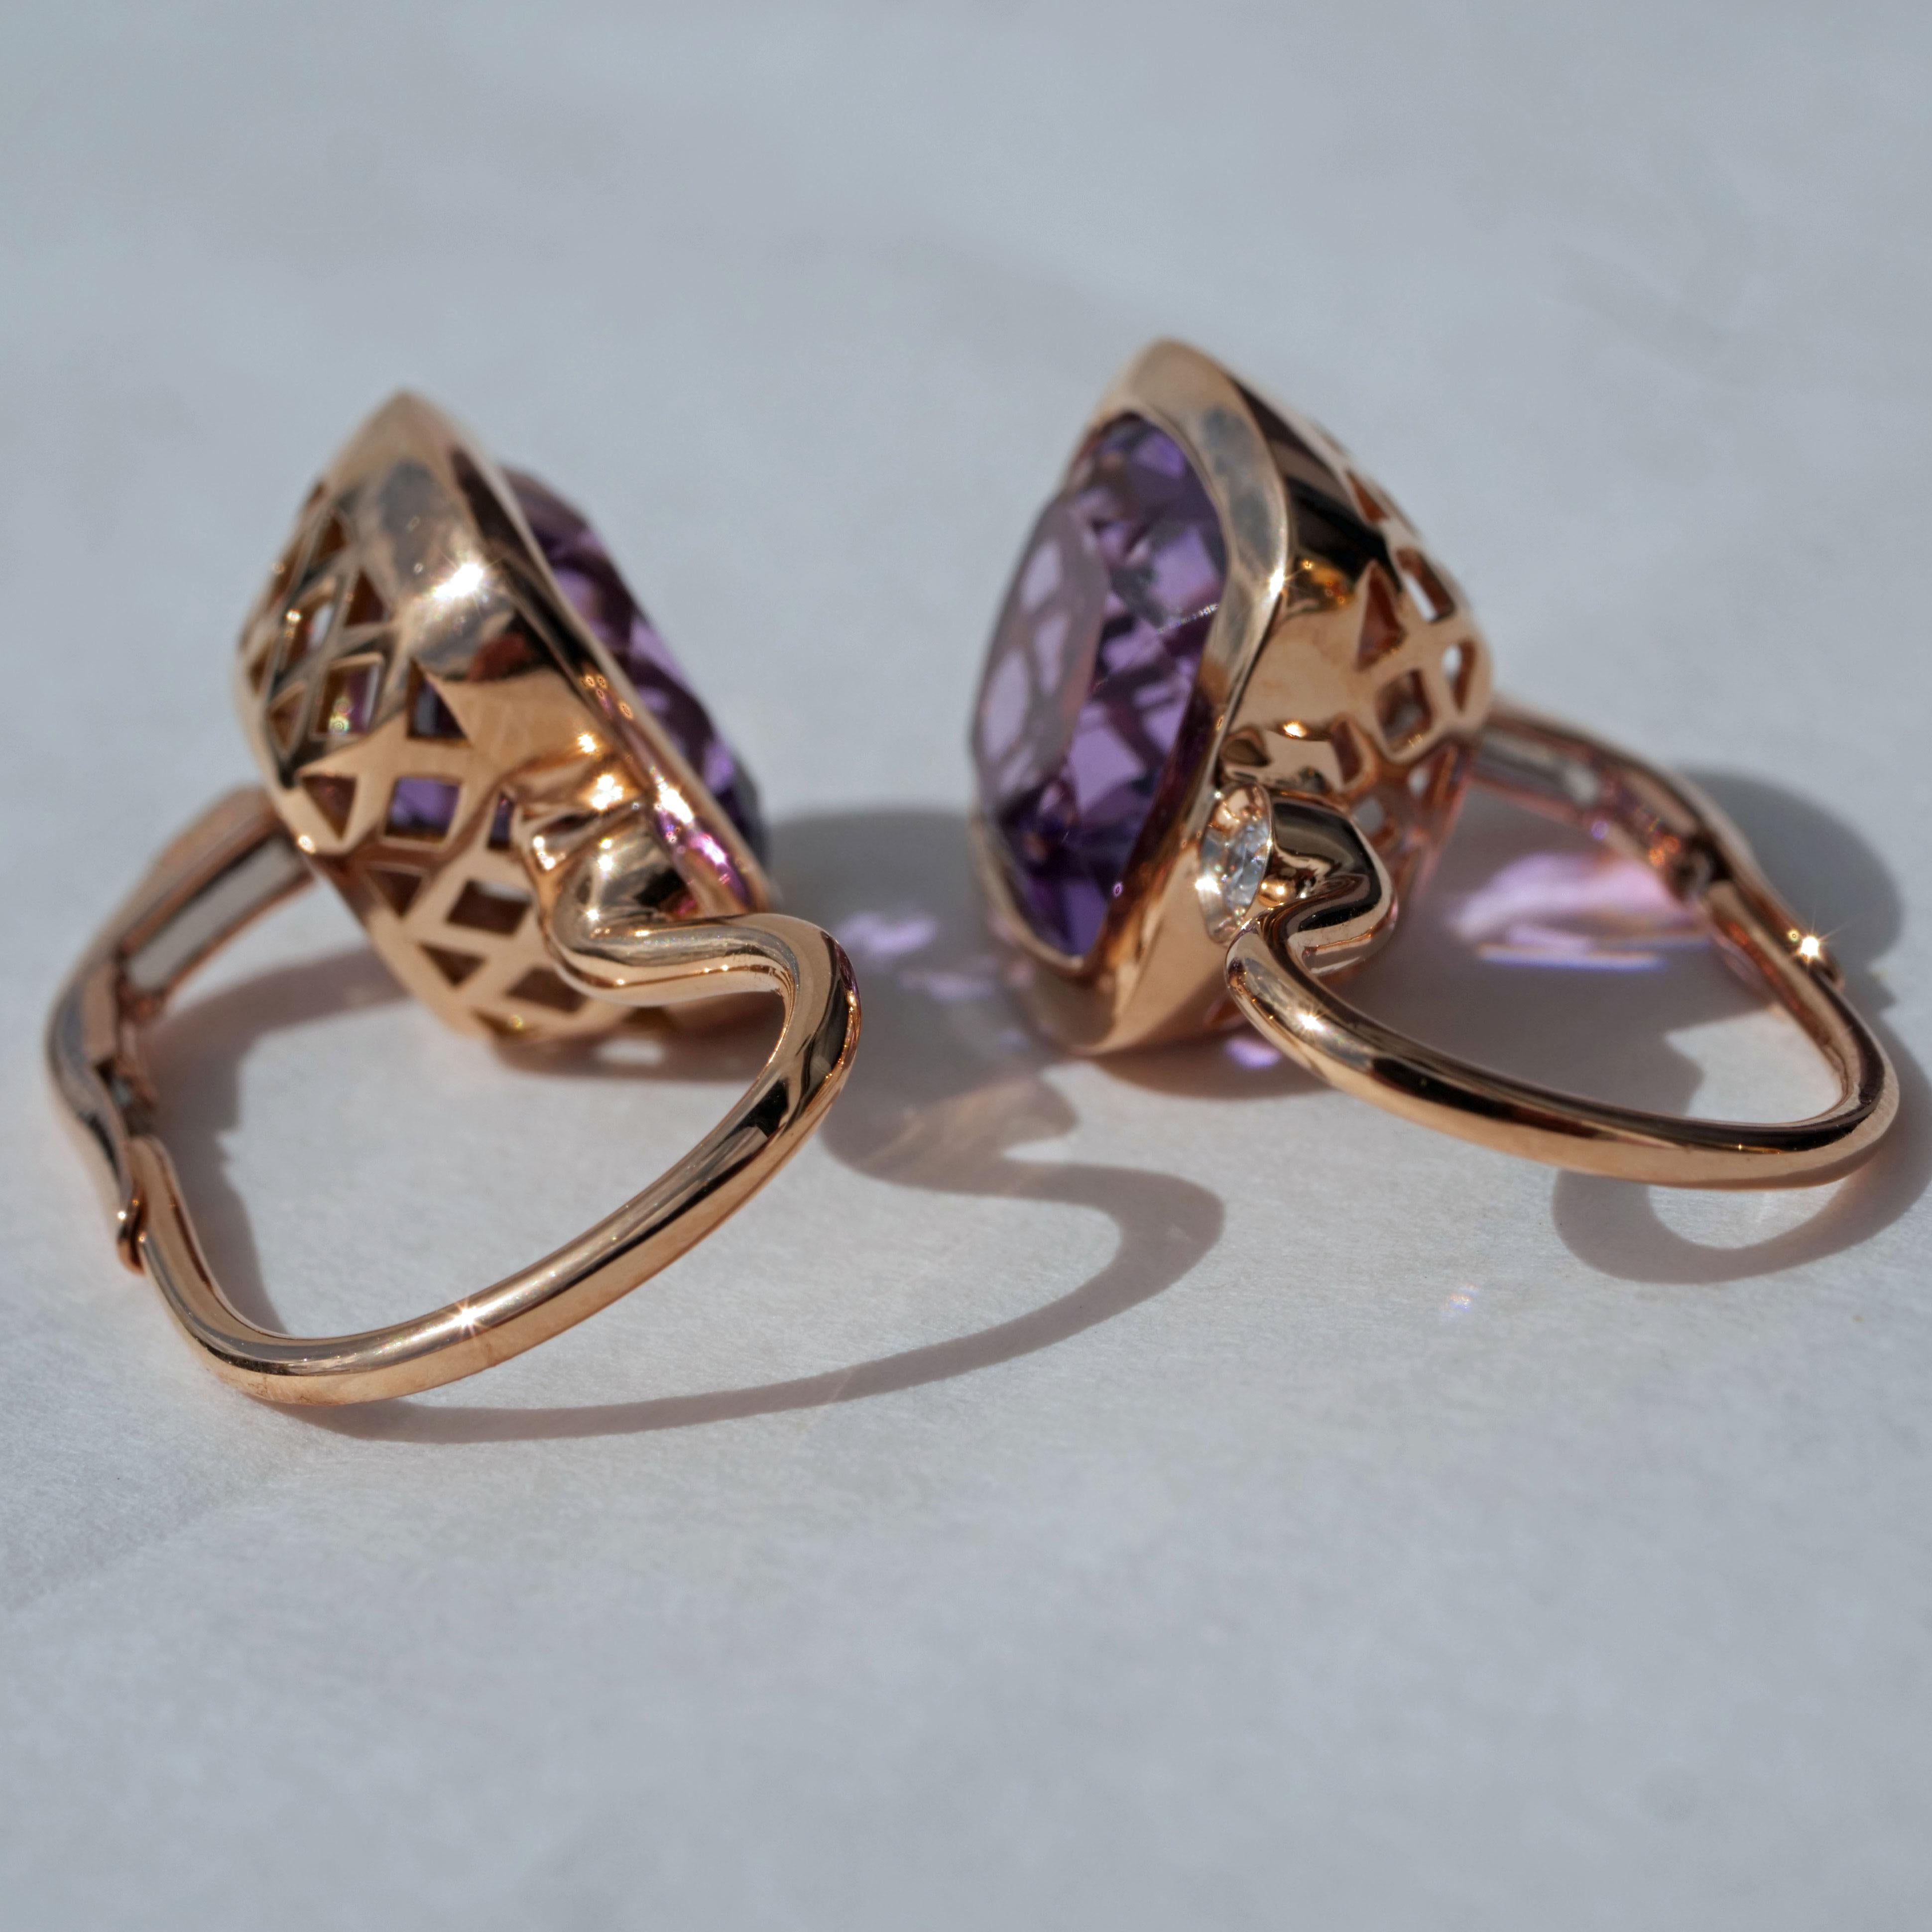 Amethyst and Diamonds Earrings Very Modern Setting High End Italian Jewellery  For Sale 4